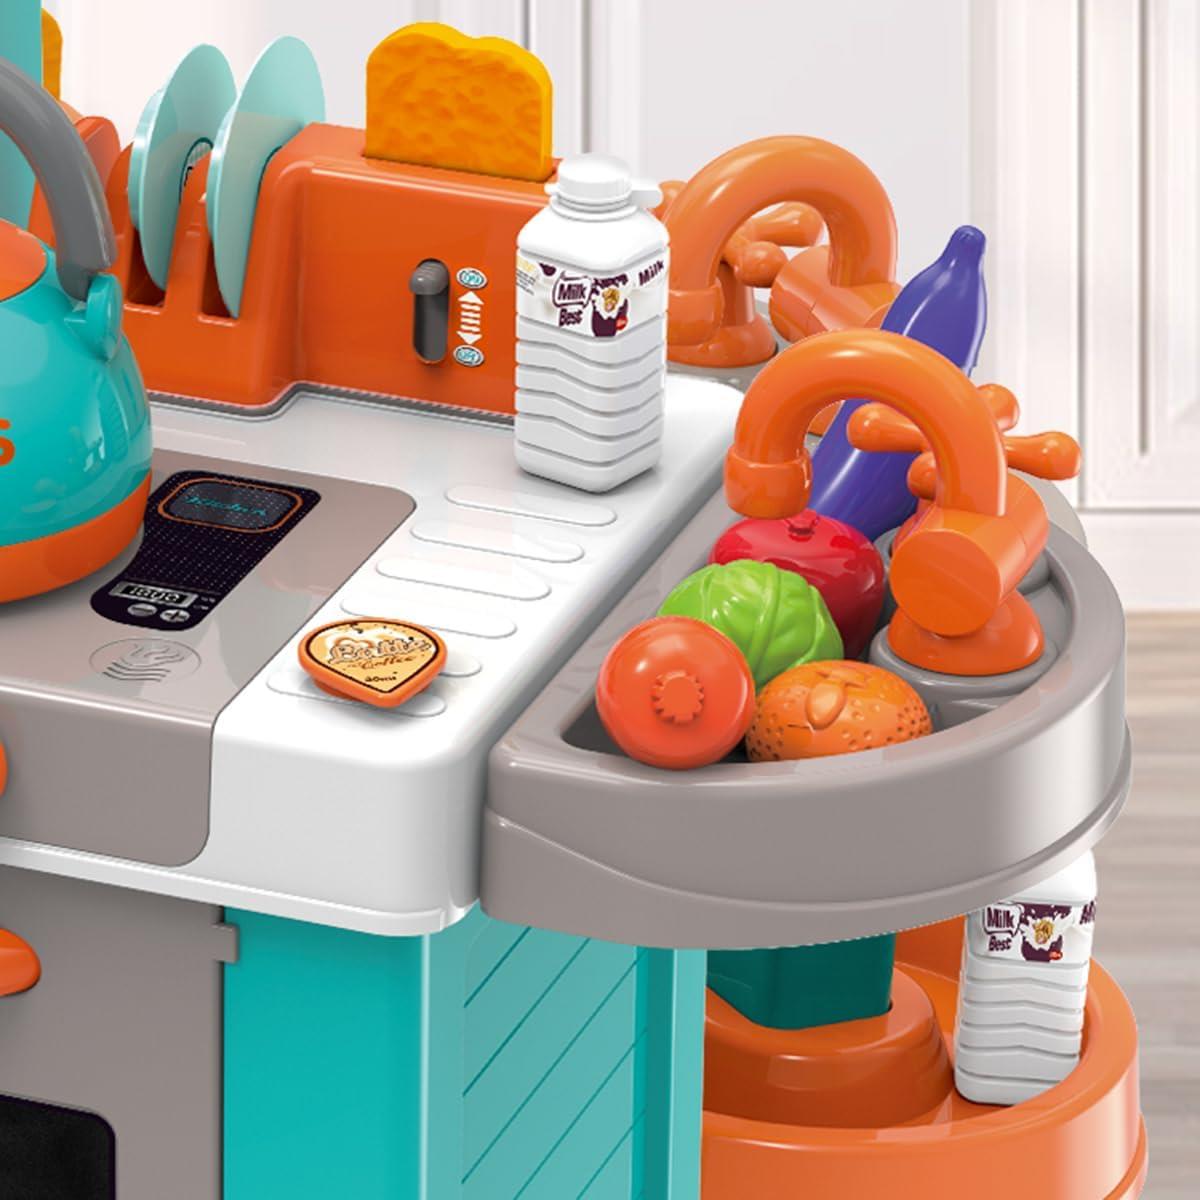 Kids Kitchen Play Set by The Magic Toy Shop - UKBuyZone